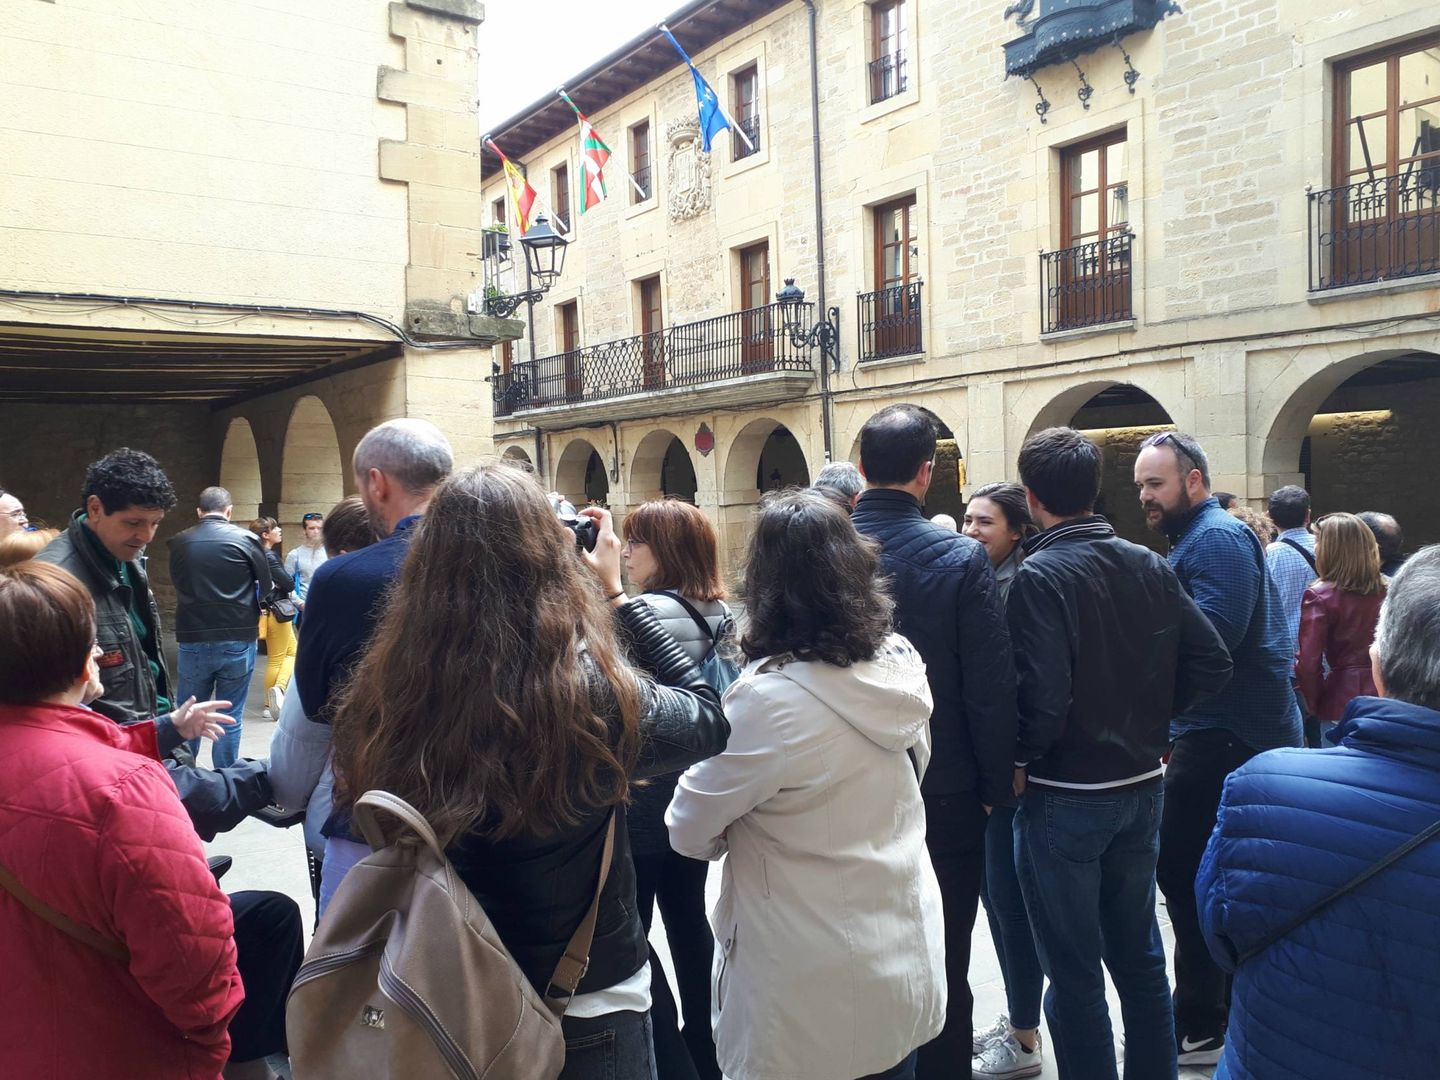 Numerosos turistas junto a la casa consistorial de Laguardia. (J.M.A.)